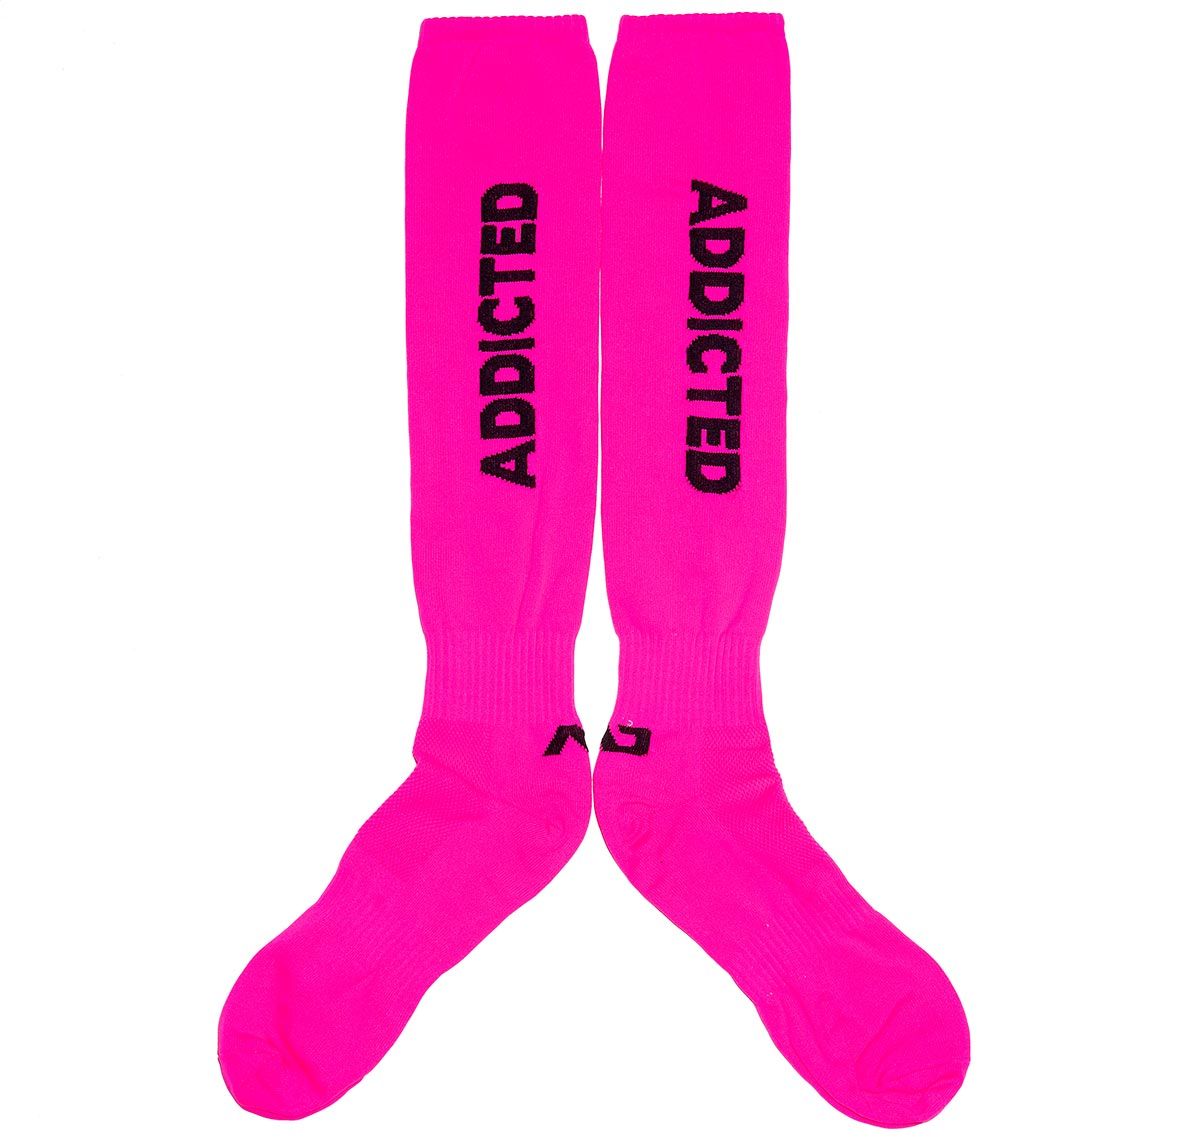 Addicted Sport socks ADDICTED NEON SOCKS AD1155, neonpink